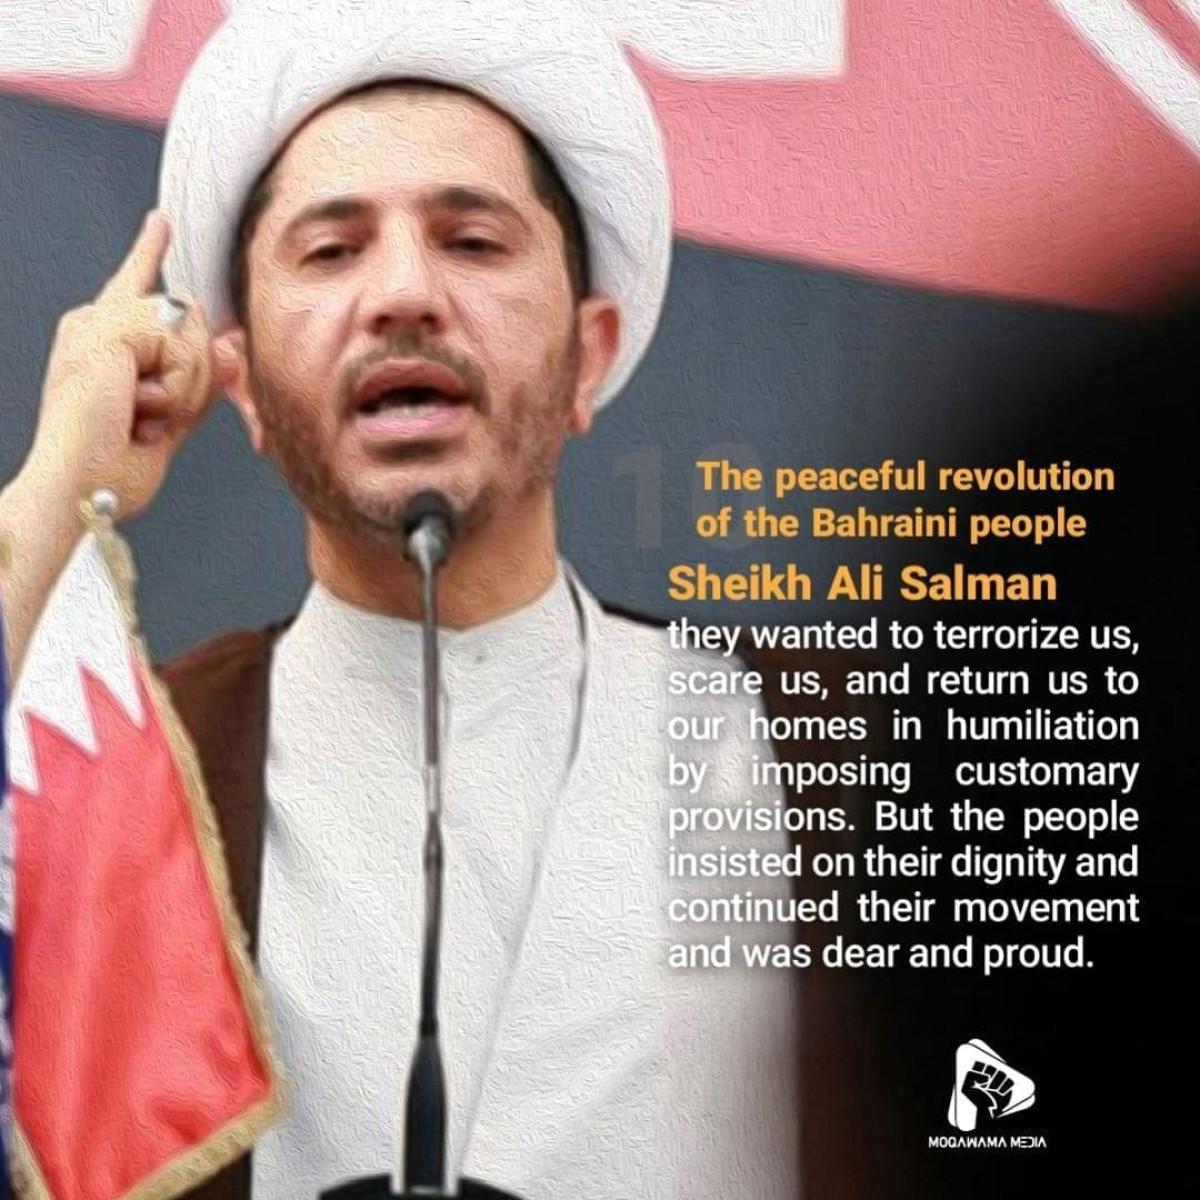 The peaceful revolution of the Bahraini people12